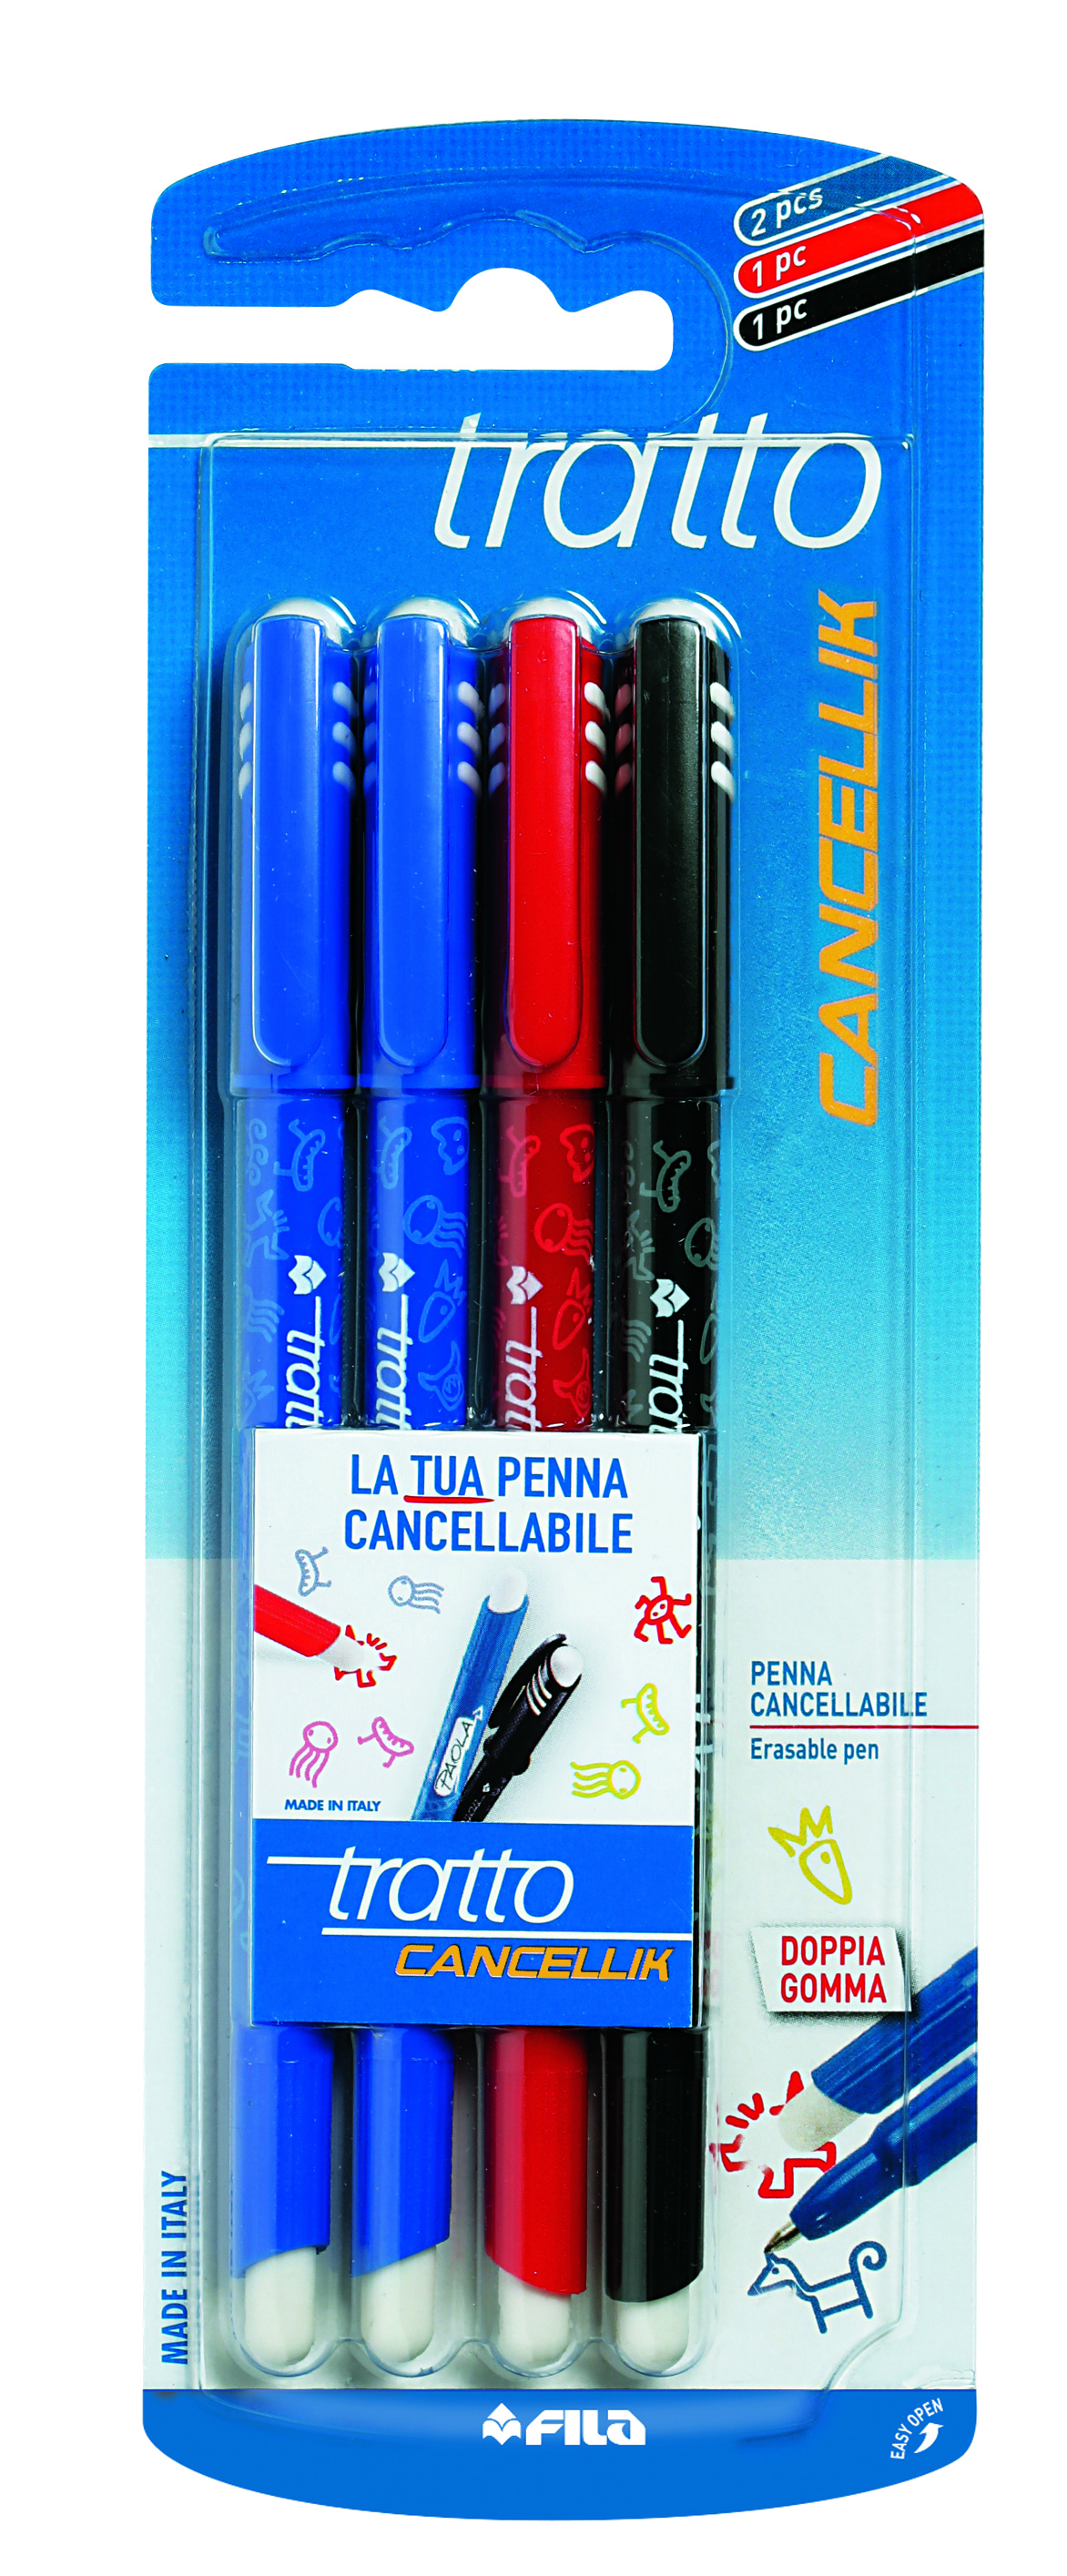 Penna cancellabile Tratto Cancellik blu